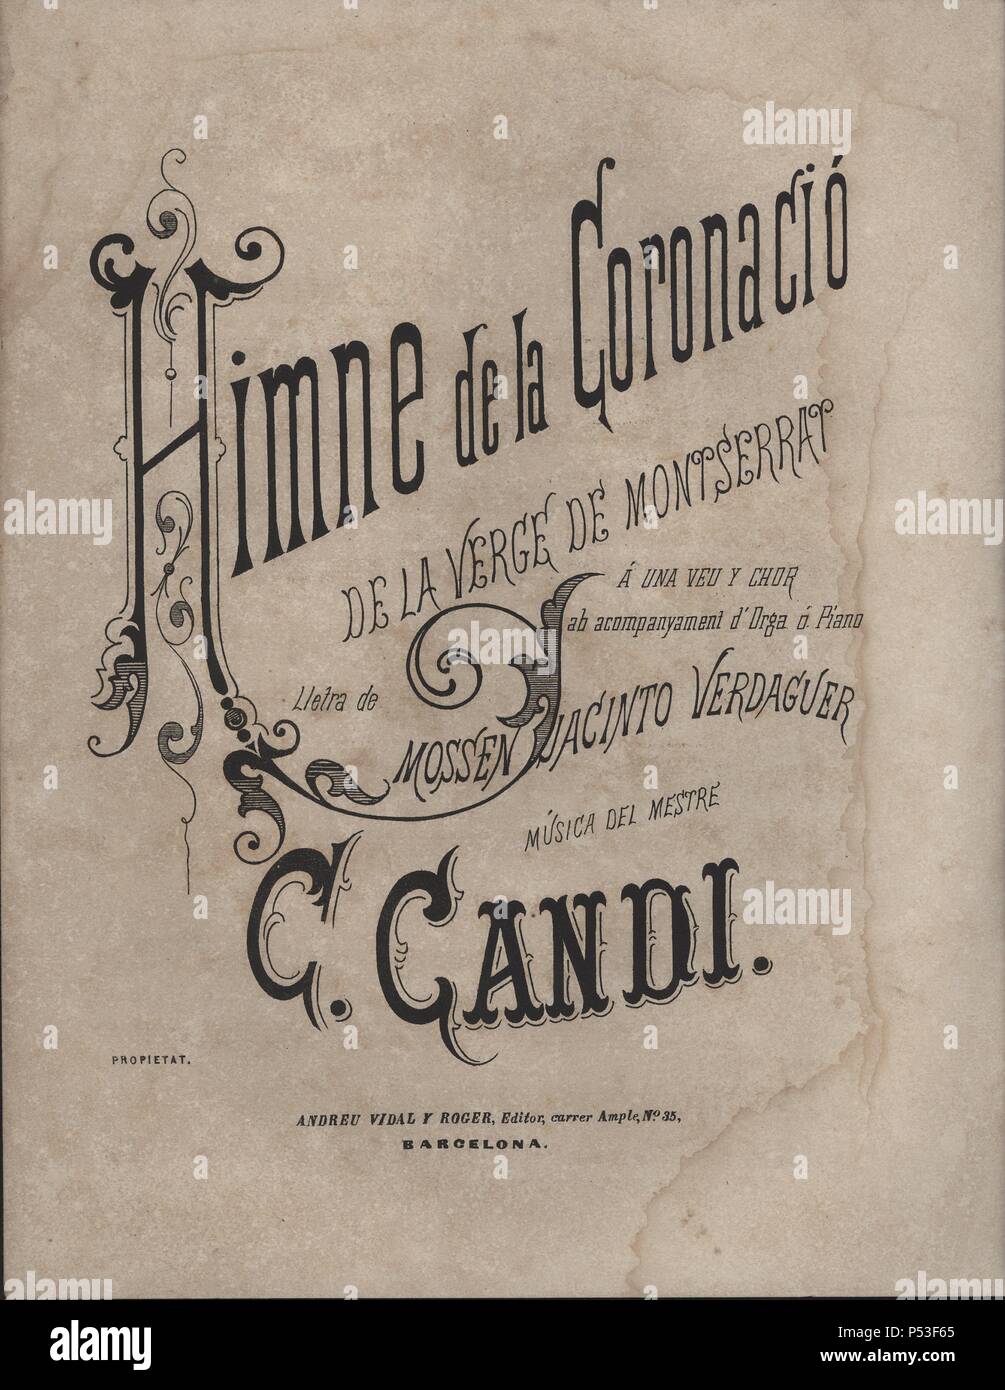 Partitura musical del 'Himne de la Coronació de la Verge de Montserrat', música de Cándido Candi (1844-1911), letra de Mossén Jacinto Verdaguer. Barcelona, 1881. Stock Photo